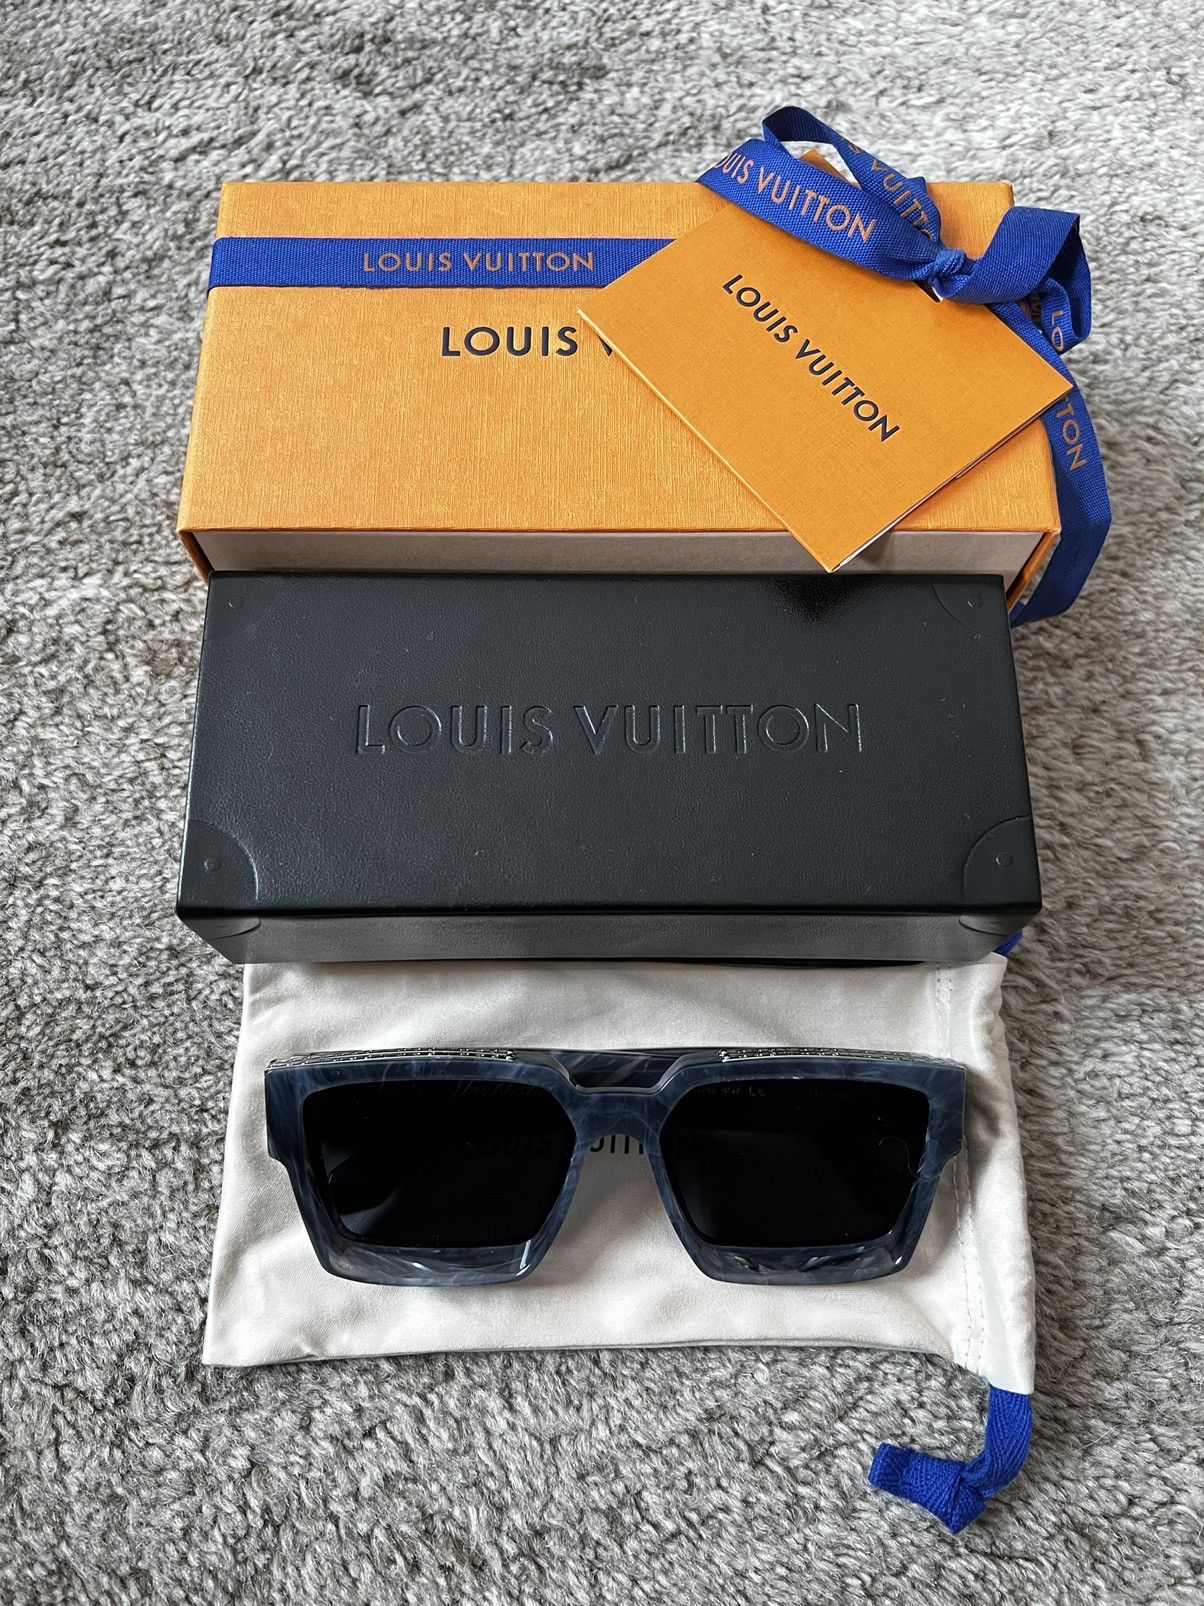 Louis Vuitton Virgil Abloh Z1326W Grey Marble 1.1 Millionaires Sunglasses  52lk81 at 1stDibs  lv millionaire sunglasses grey, louis vuitton  sunglasses virgil abloh, louis vuitton marble sunglasses